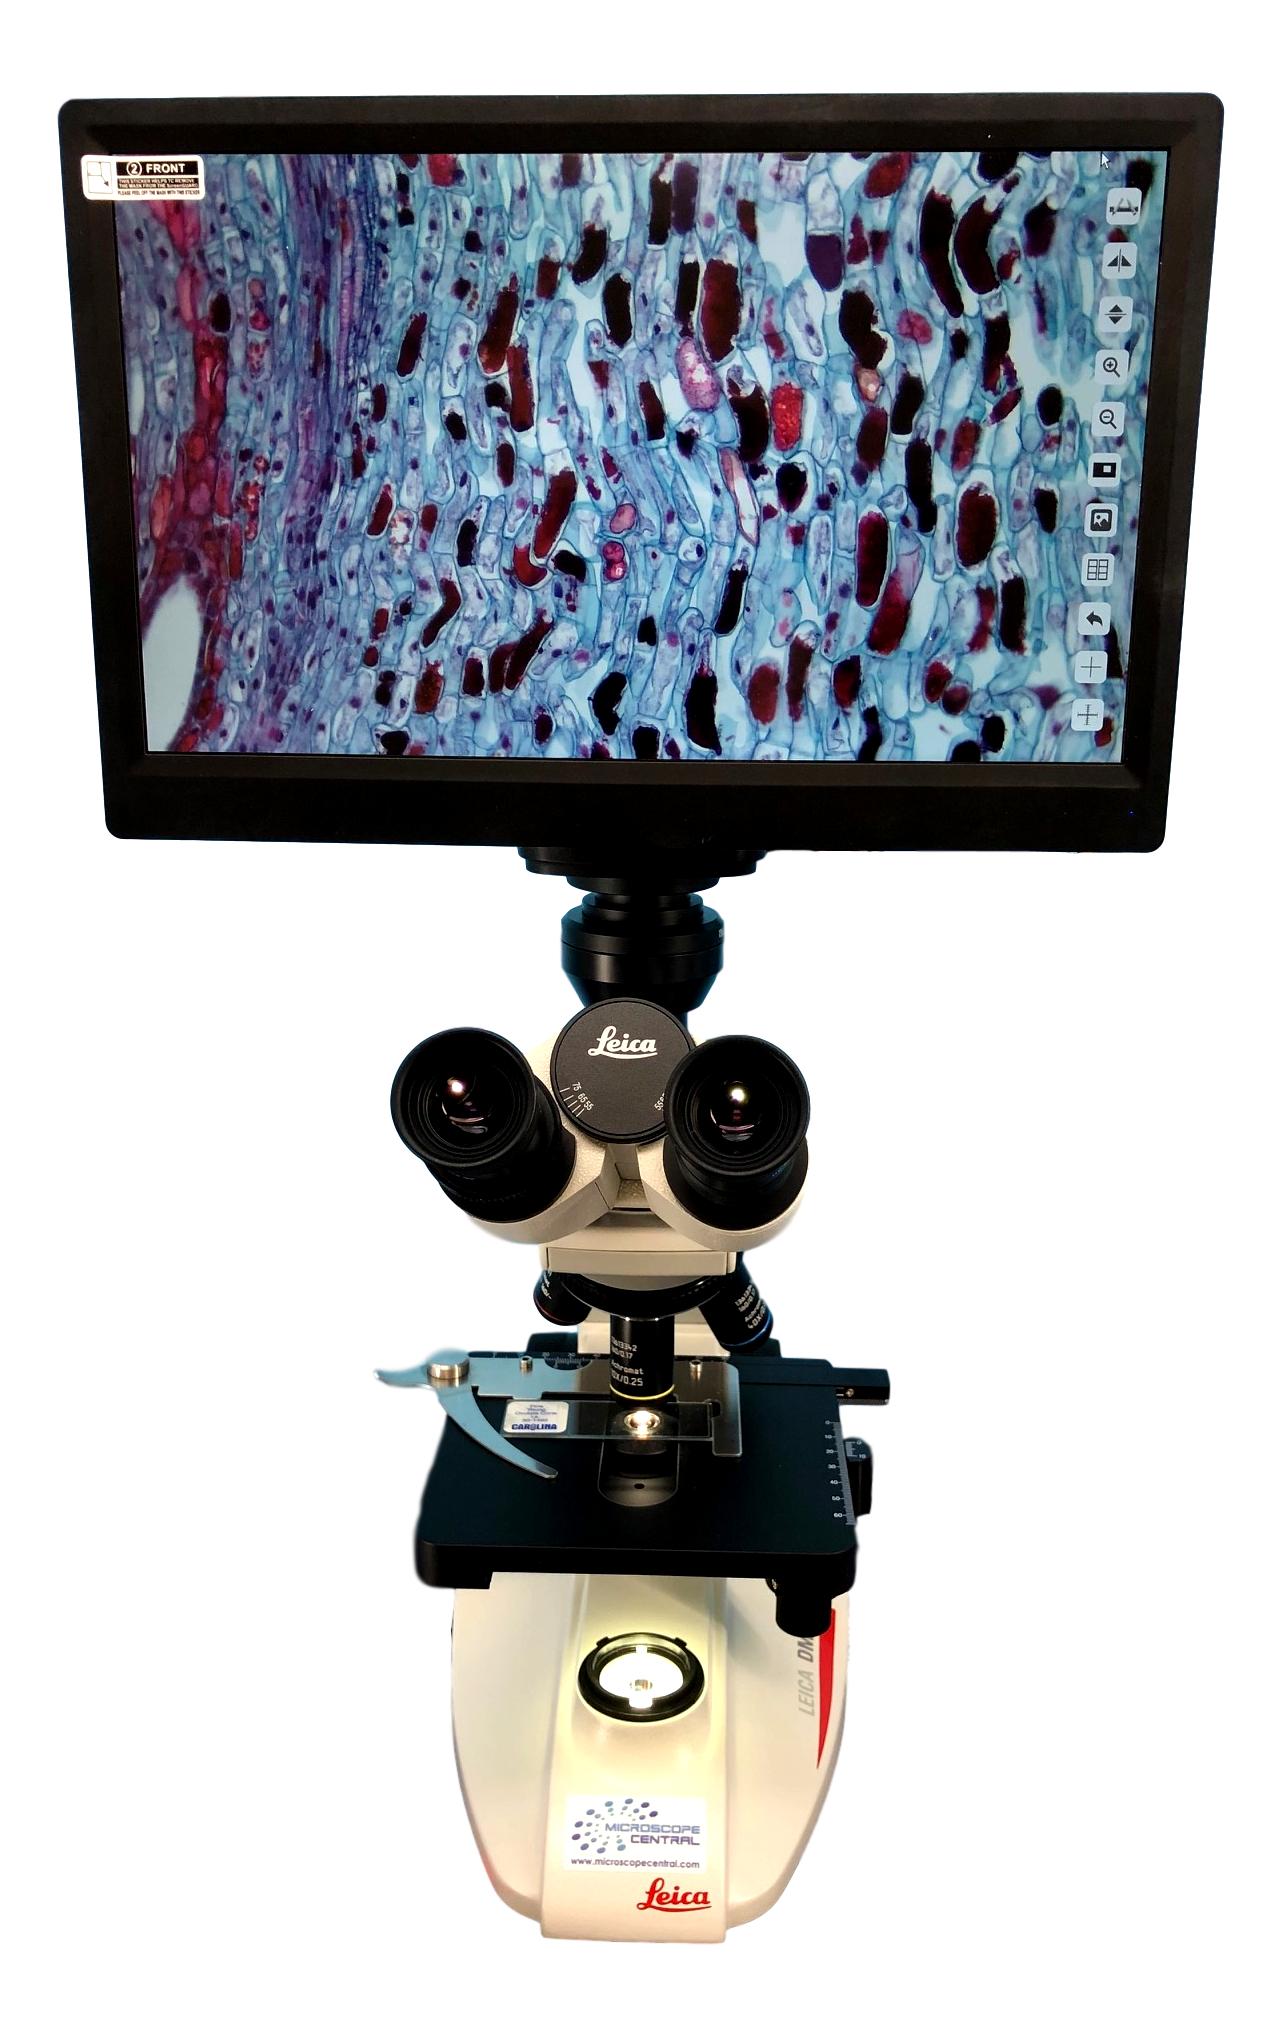 Leica DM300 Digital Microscope